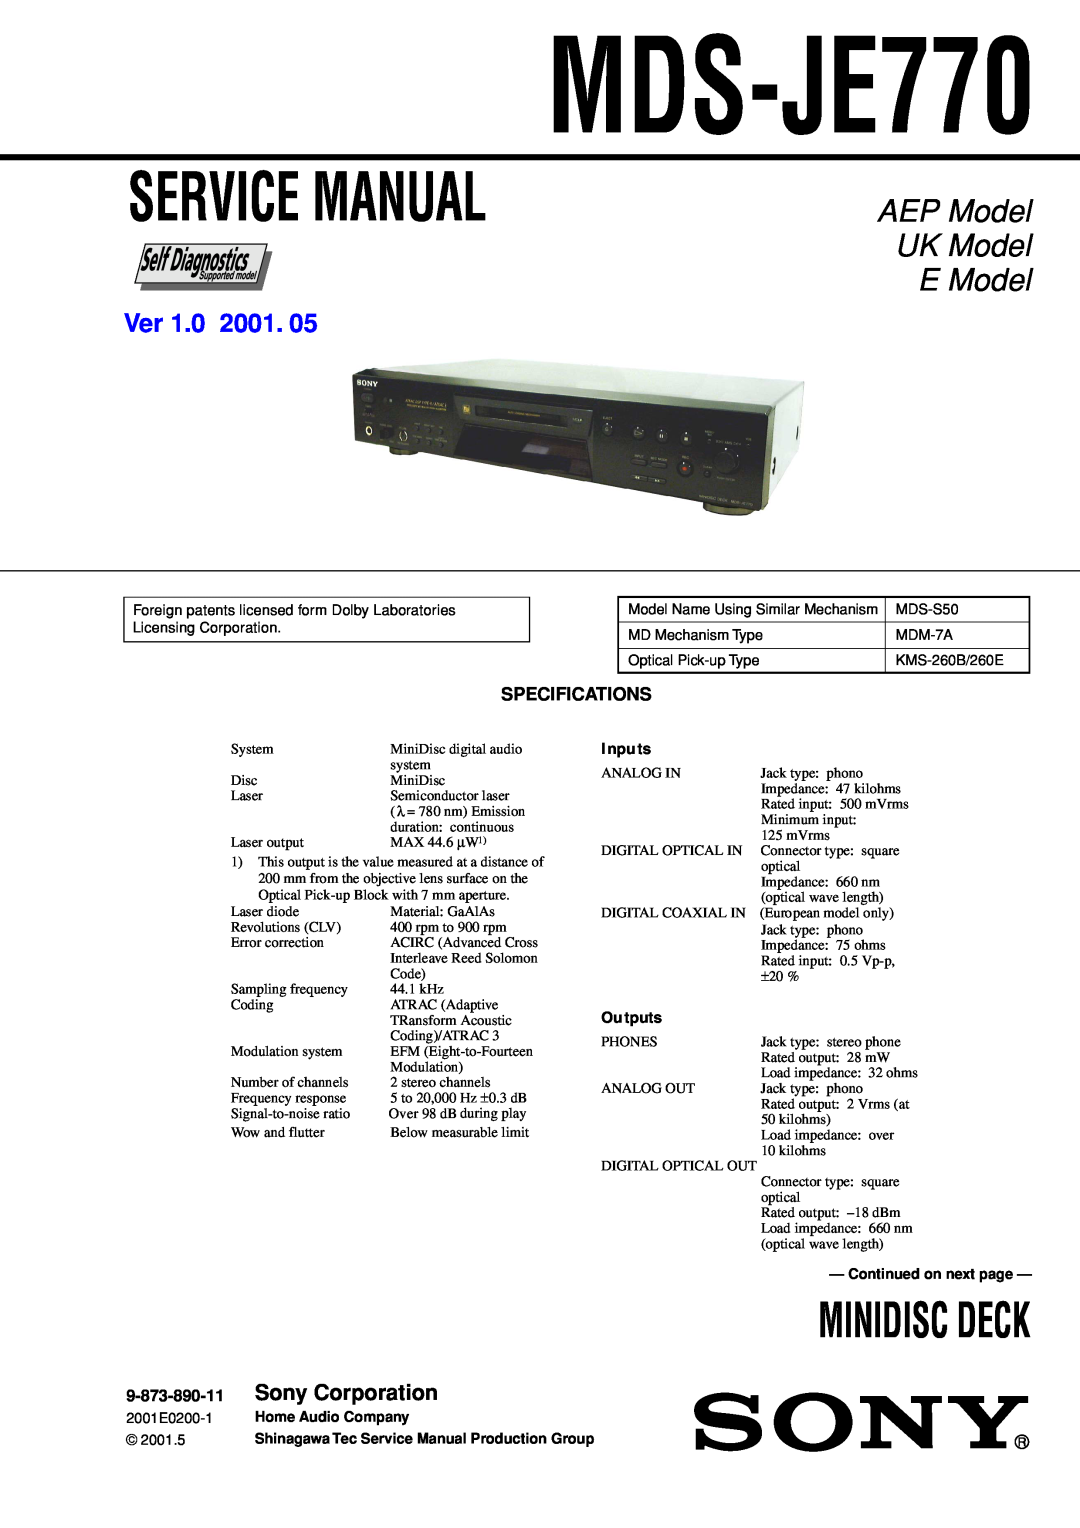 Sony MDS-JE770 specifications Specifications, 9-873-890-11, Minidisc Deck, AEP Model UK Model E Model, Ver 